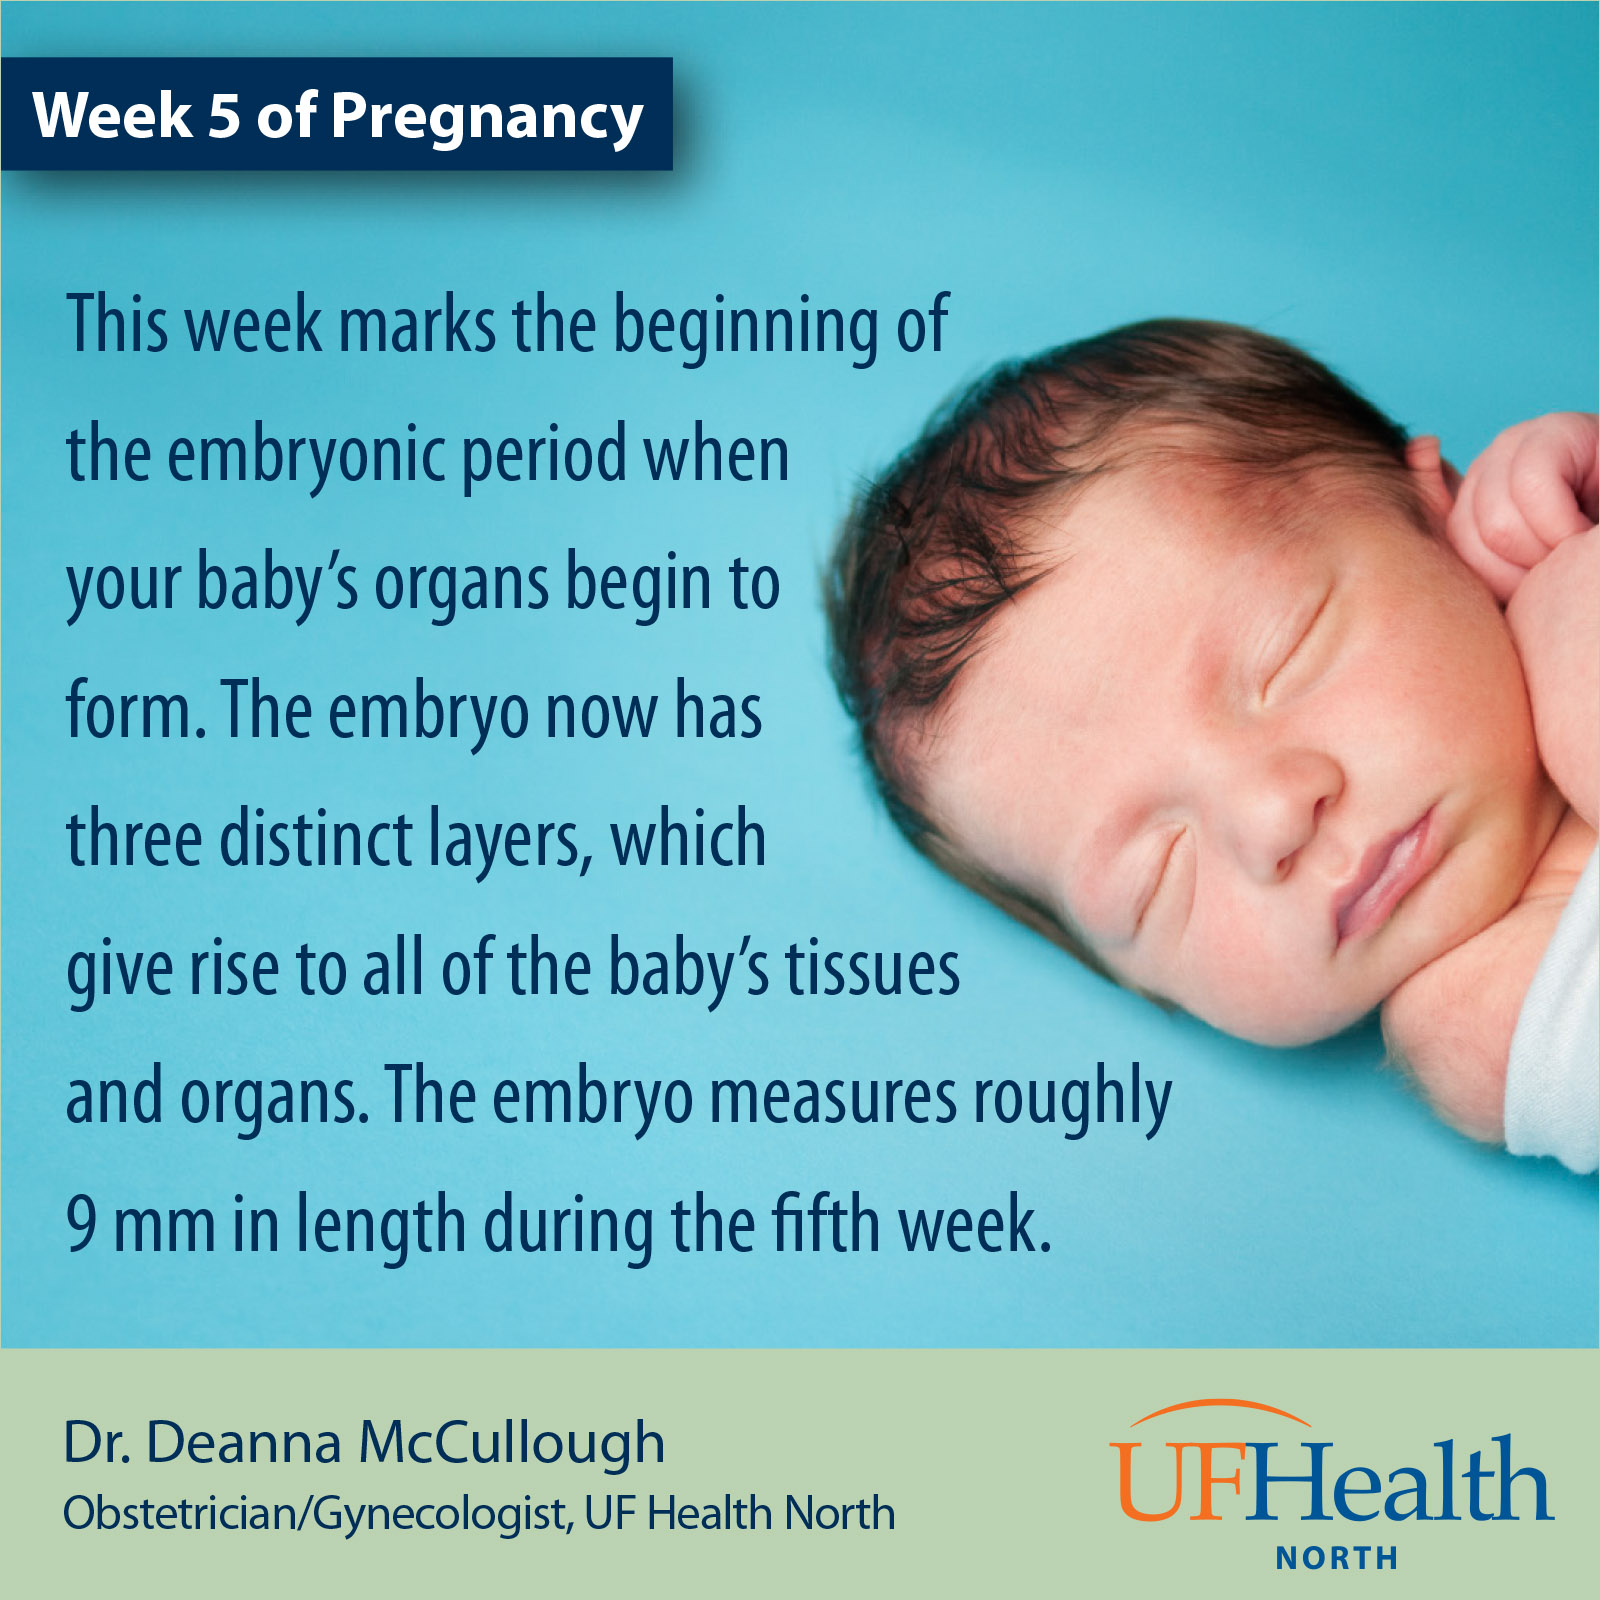 UF Health North pregnancy tip 5